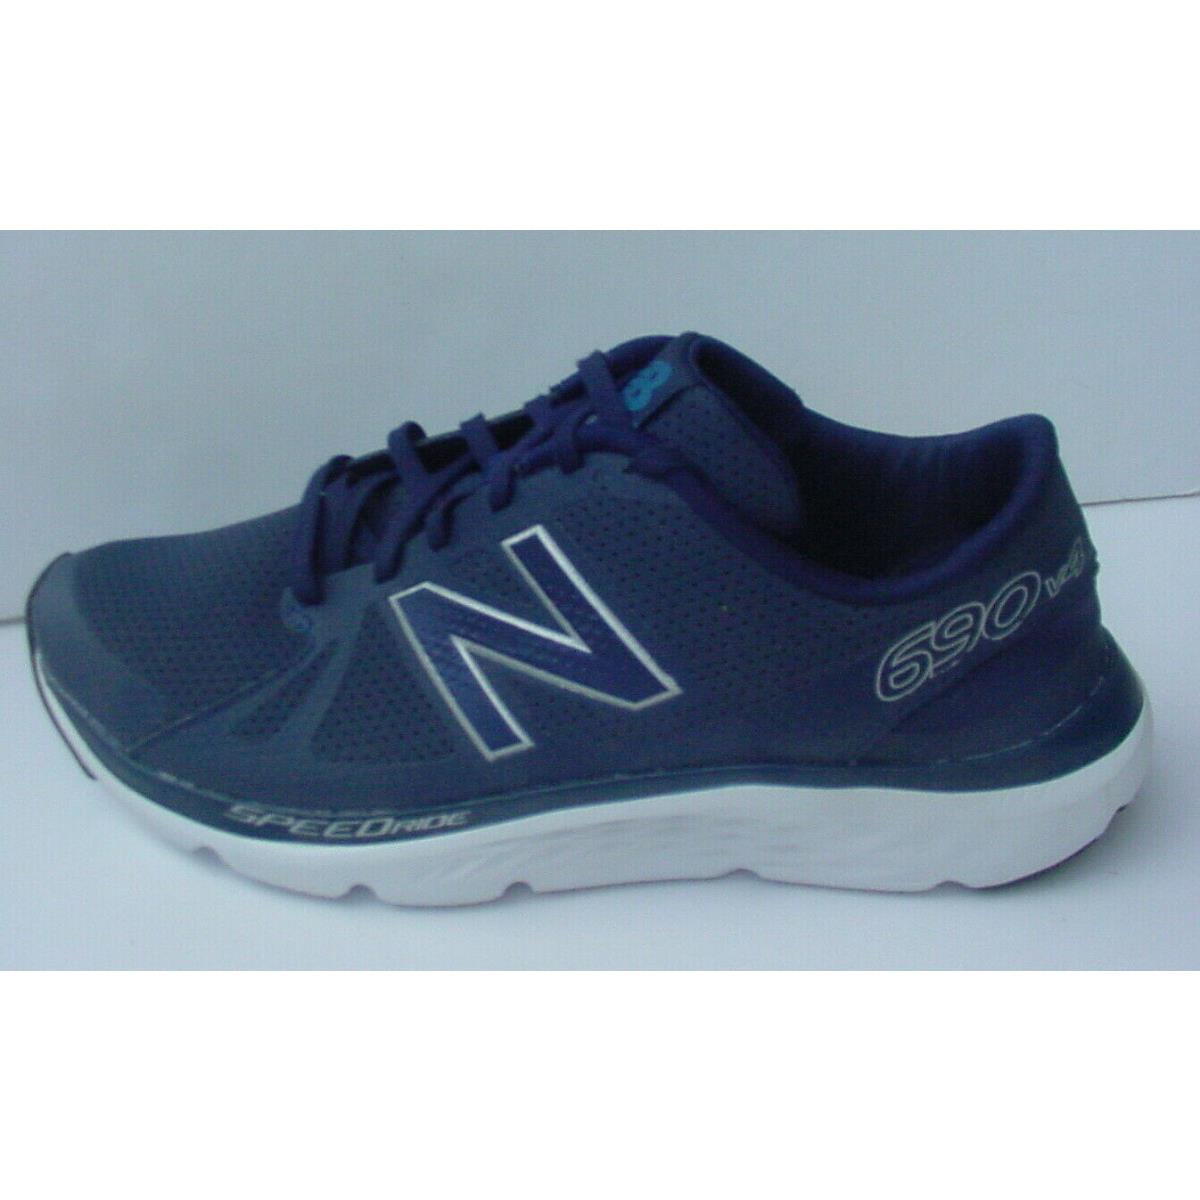 New Balance Men`s Shoe Navy Blue White Speedride M690HB4 Sneakers Running Sz 10